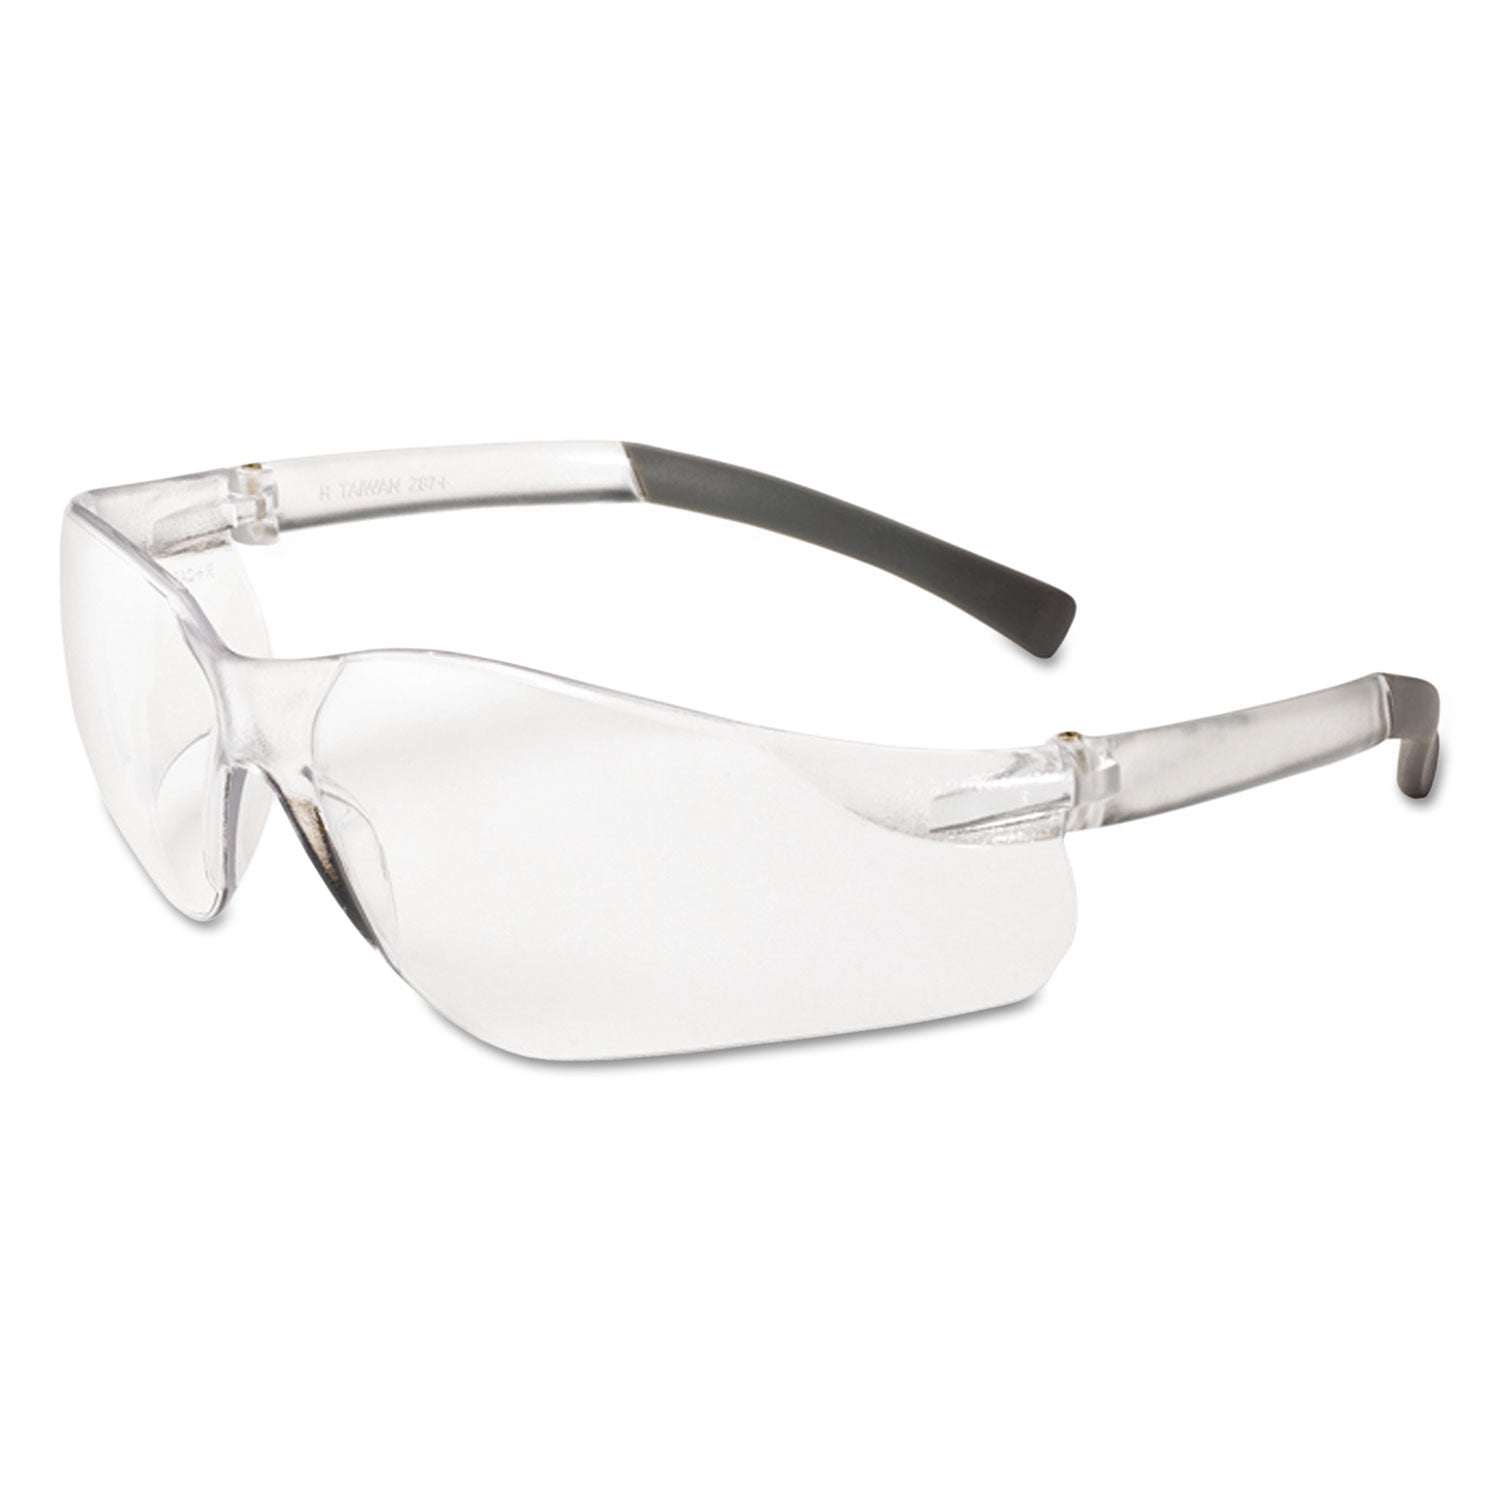 v20-eye-protection-polycarbonate-frame-clear-frame-lens-12-box_kcc25650 - 1